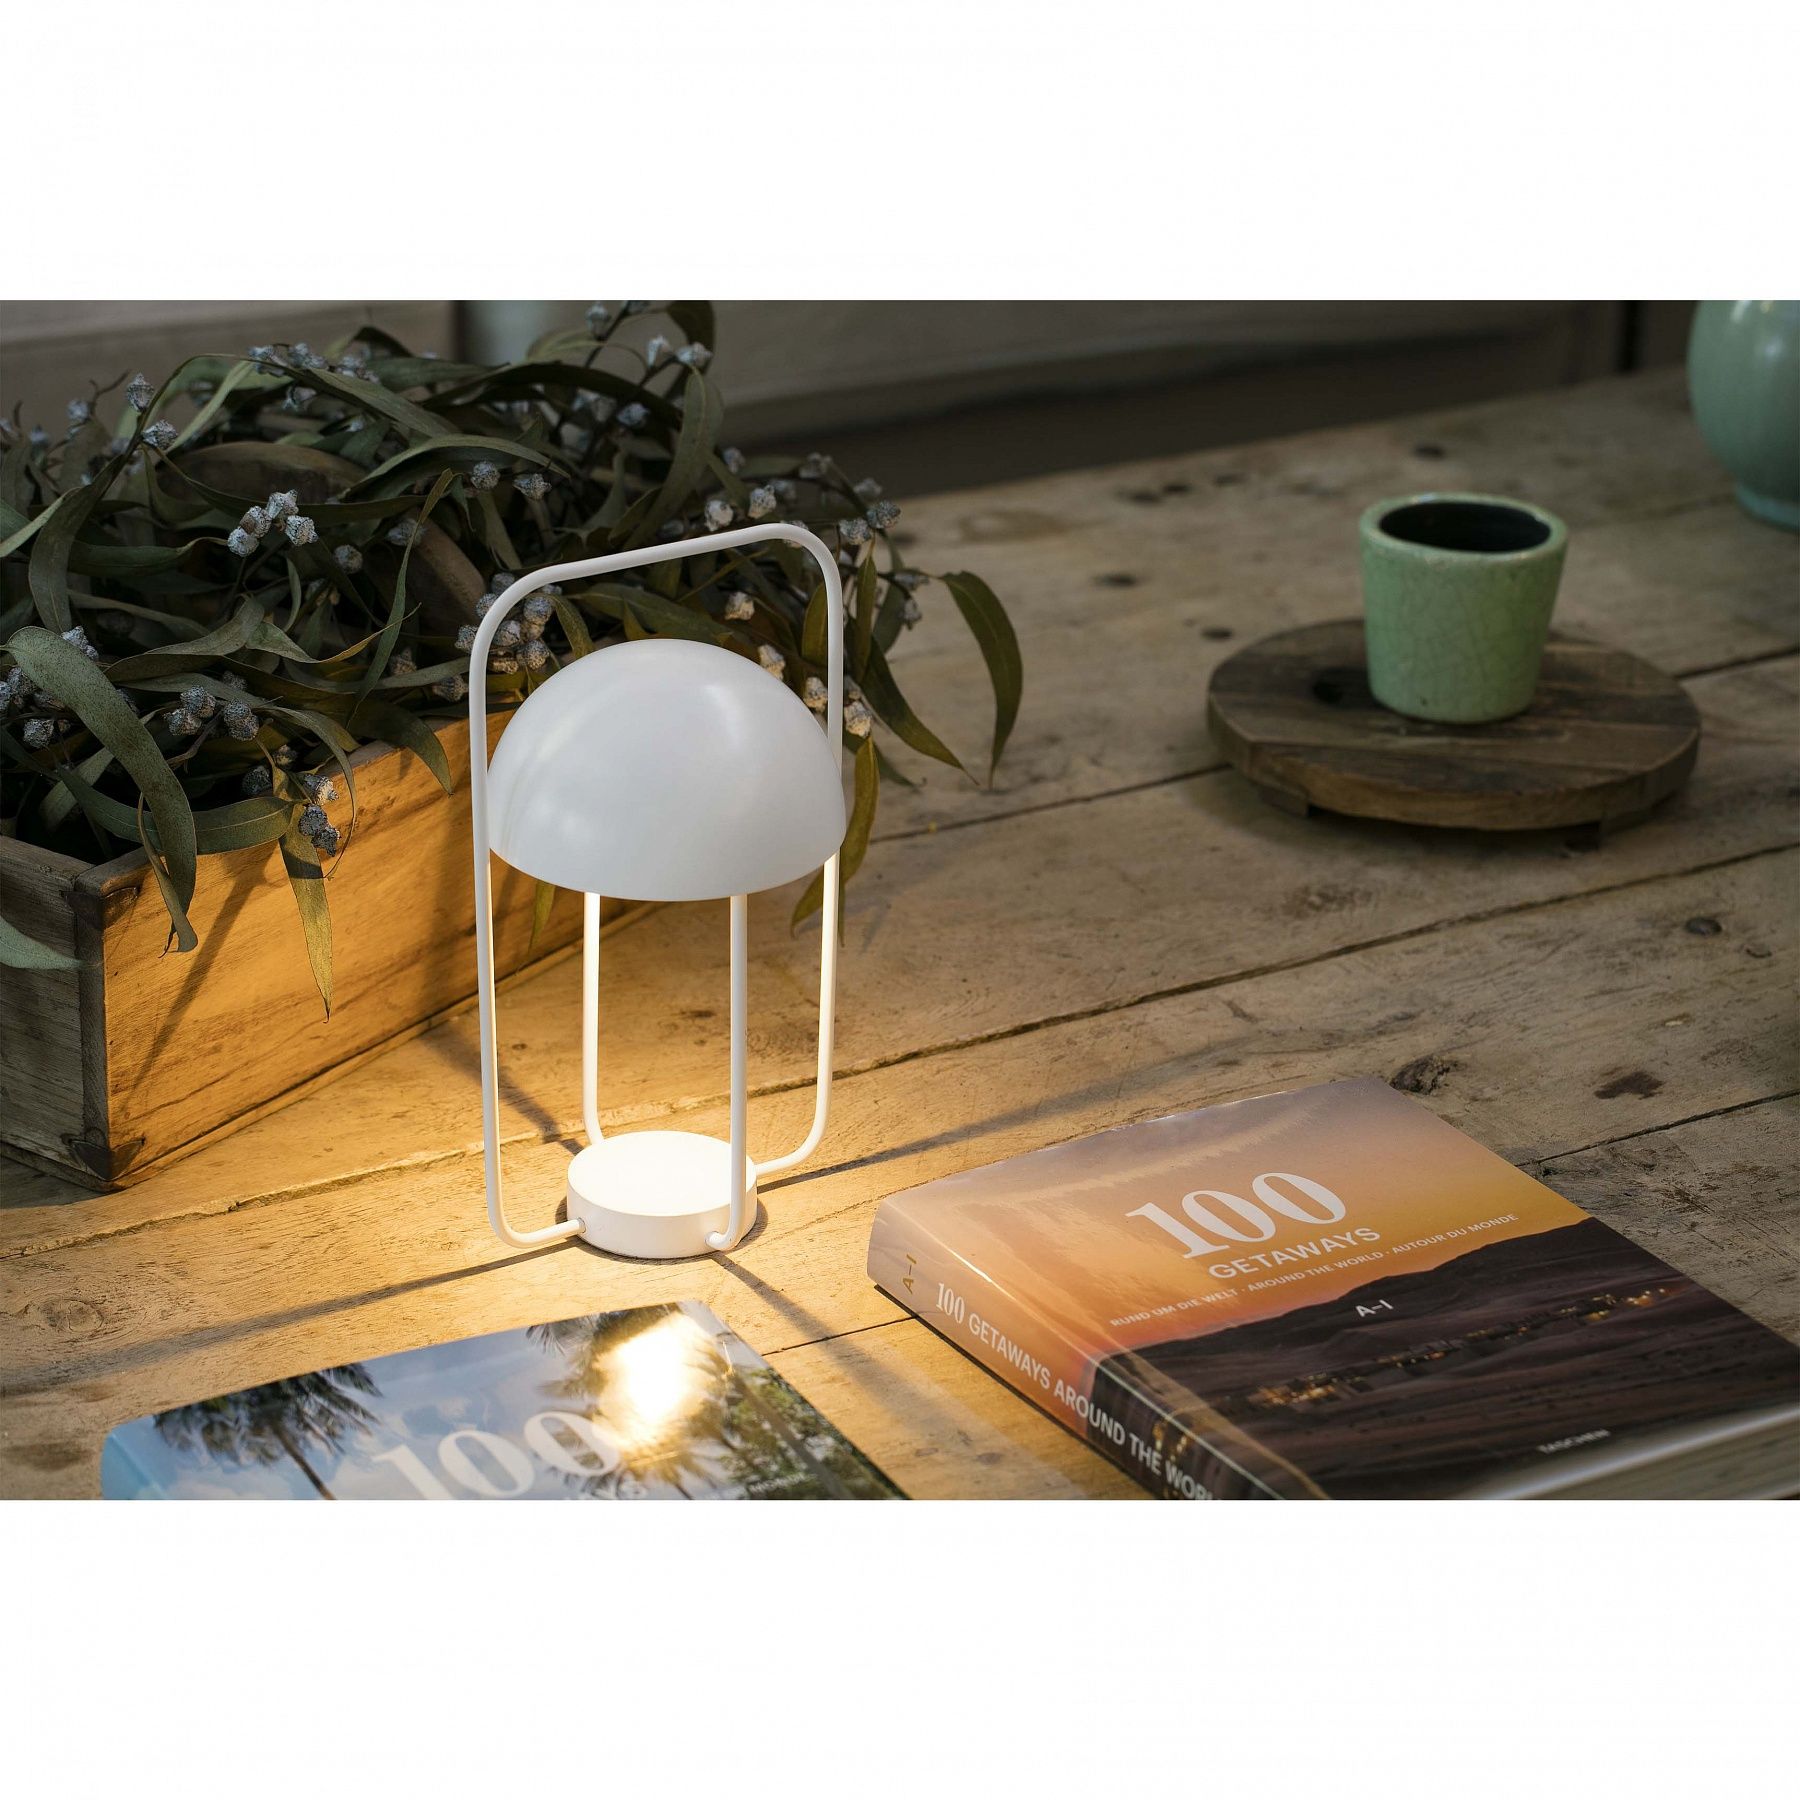 Portable lamp Jellyfish white 24524